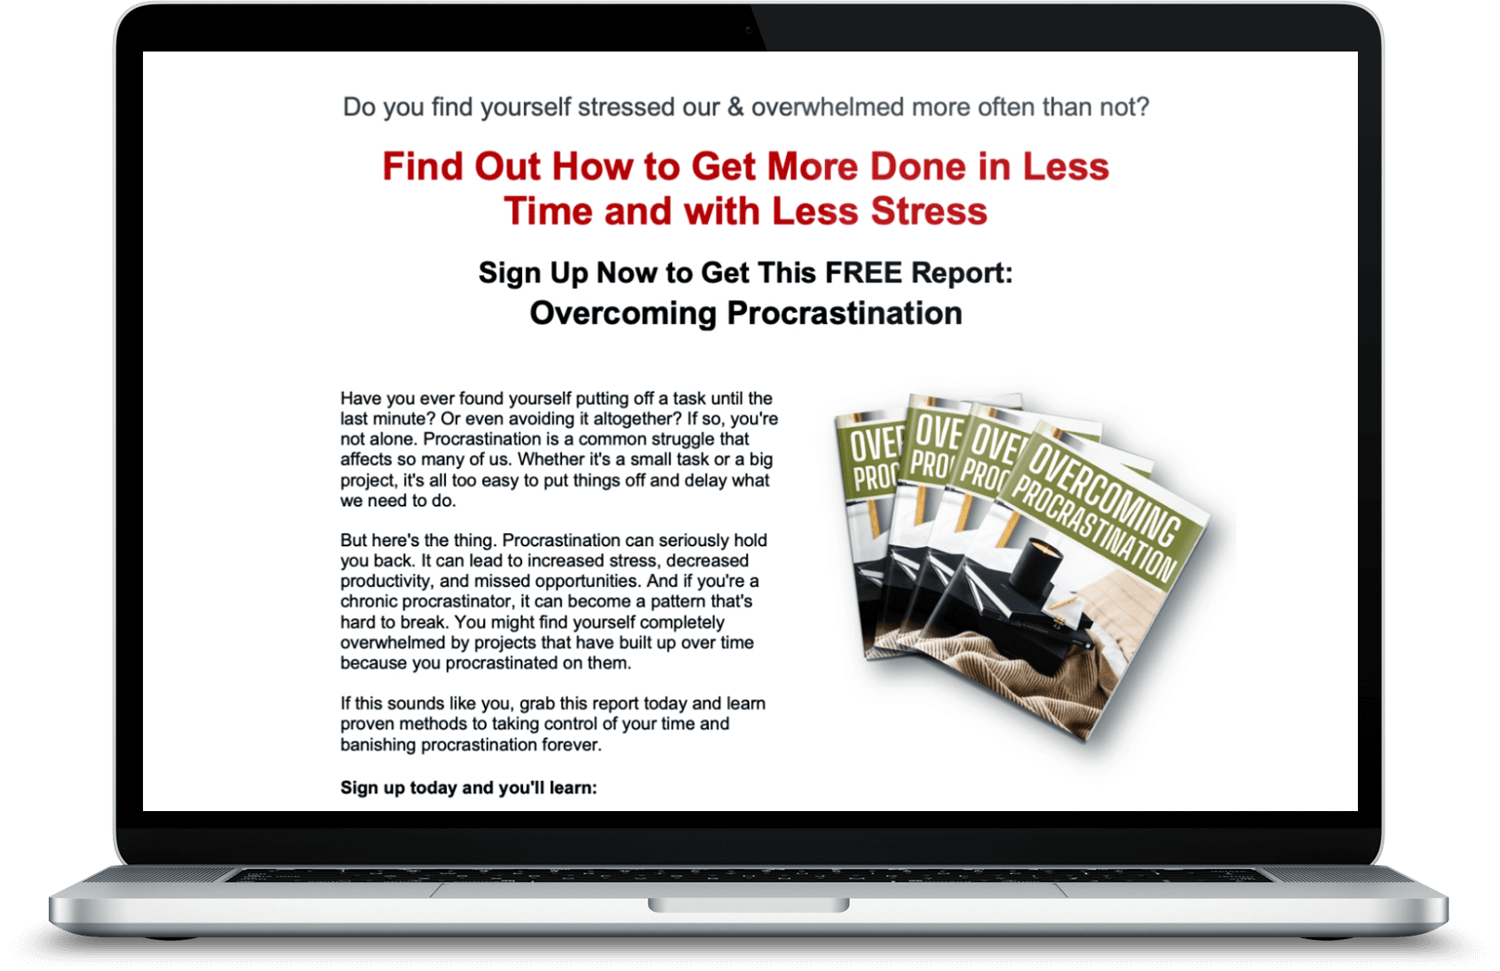 Overcoming Procrastination optin page PLR  marketing image